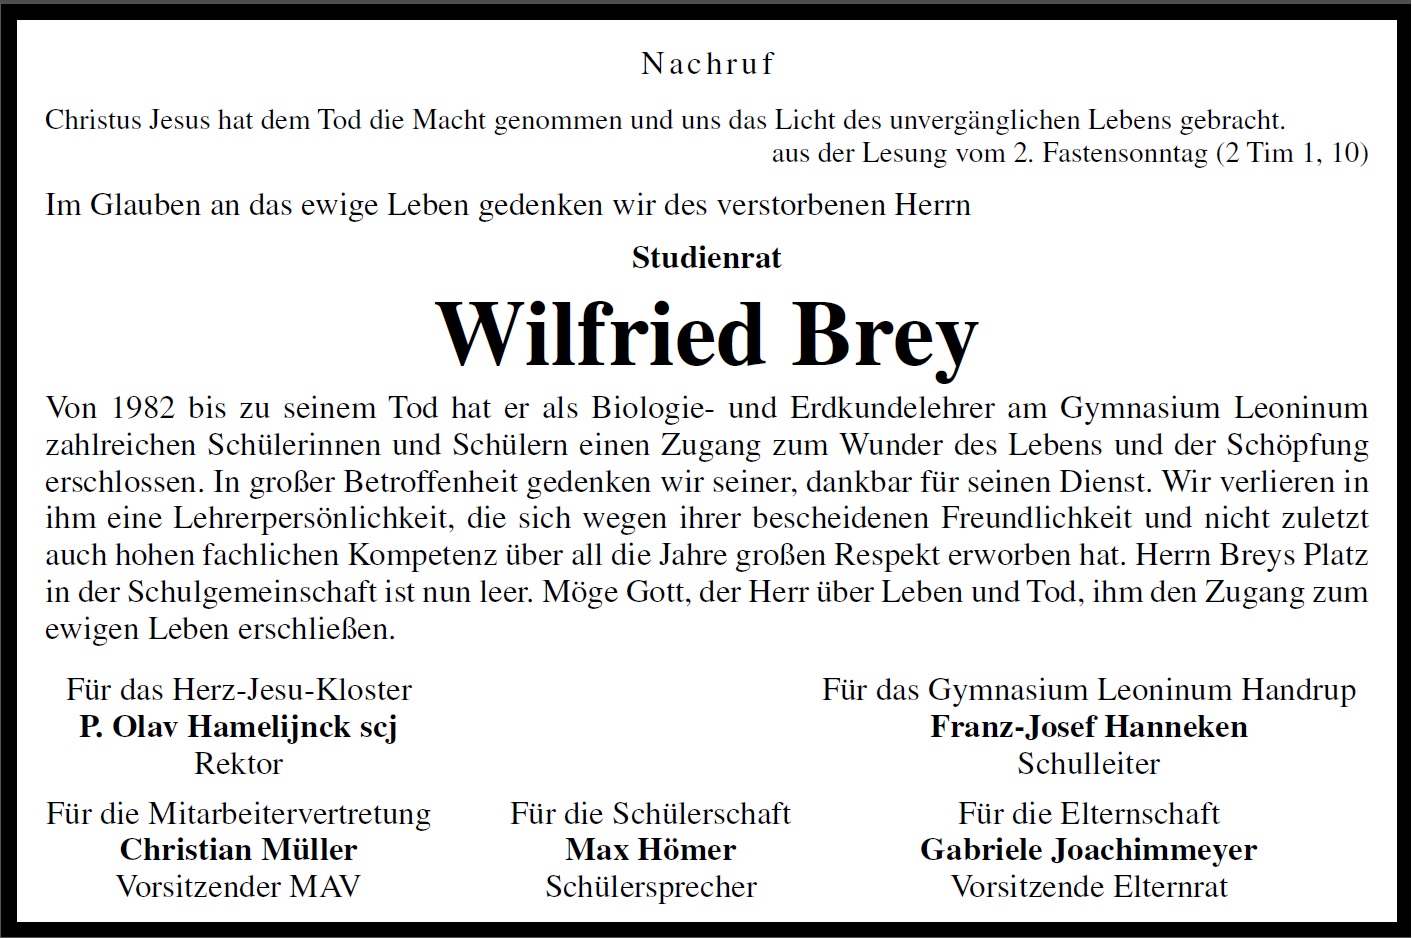 66 Nachruf Wilfried Brey